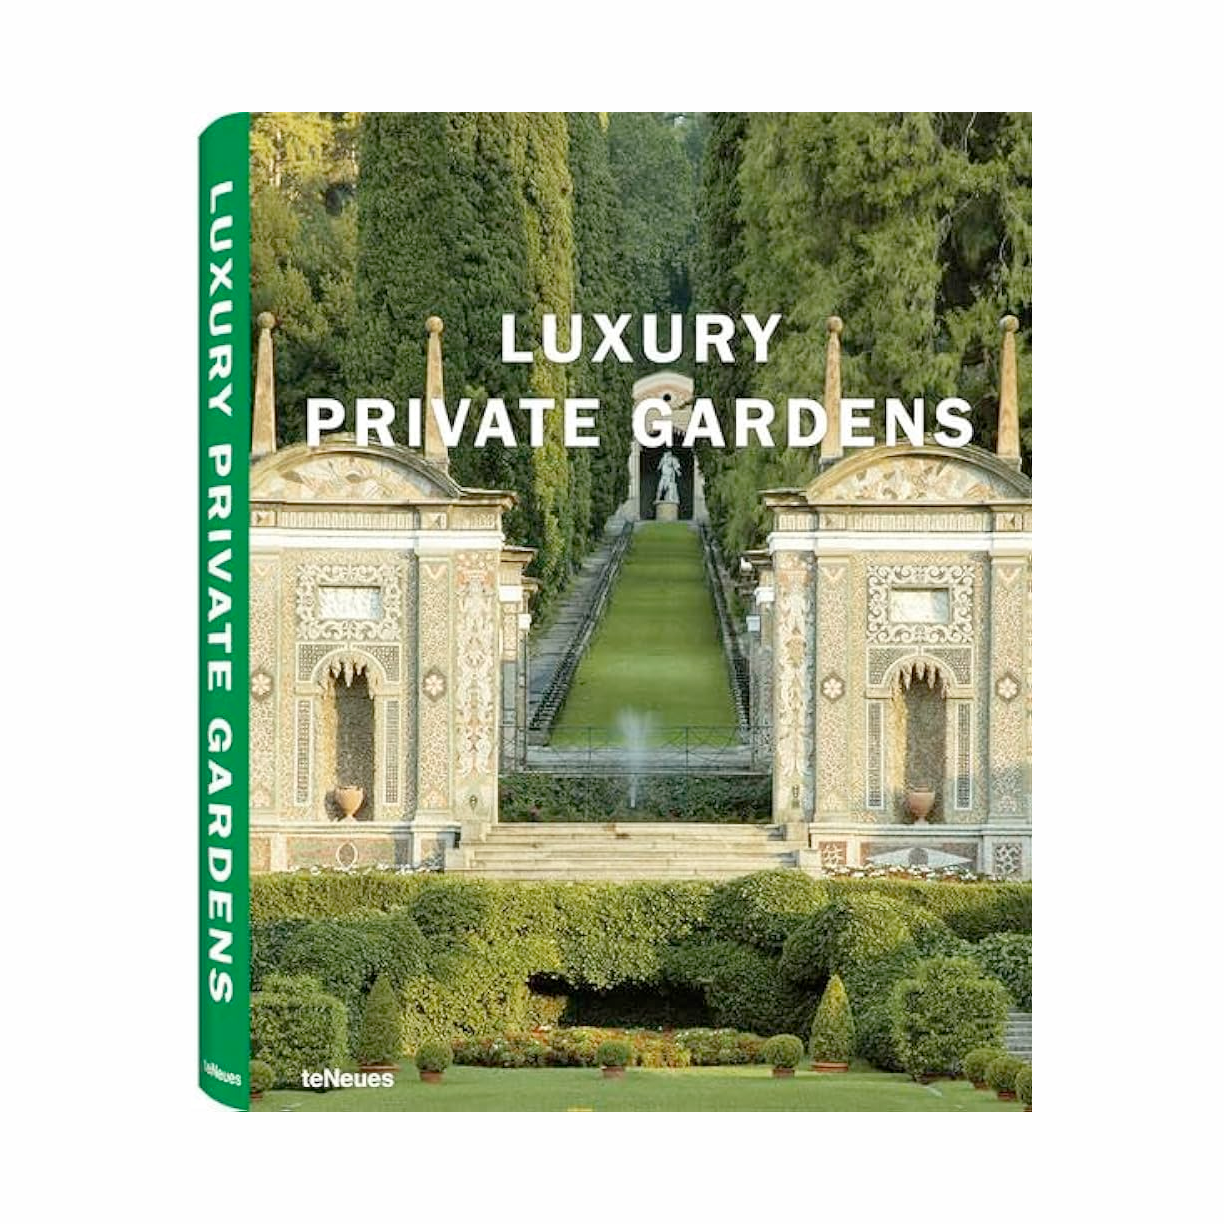 Luxury Private Gardens, TENEUES - RSVP Style